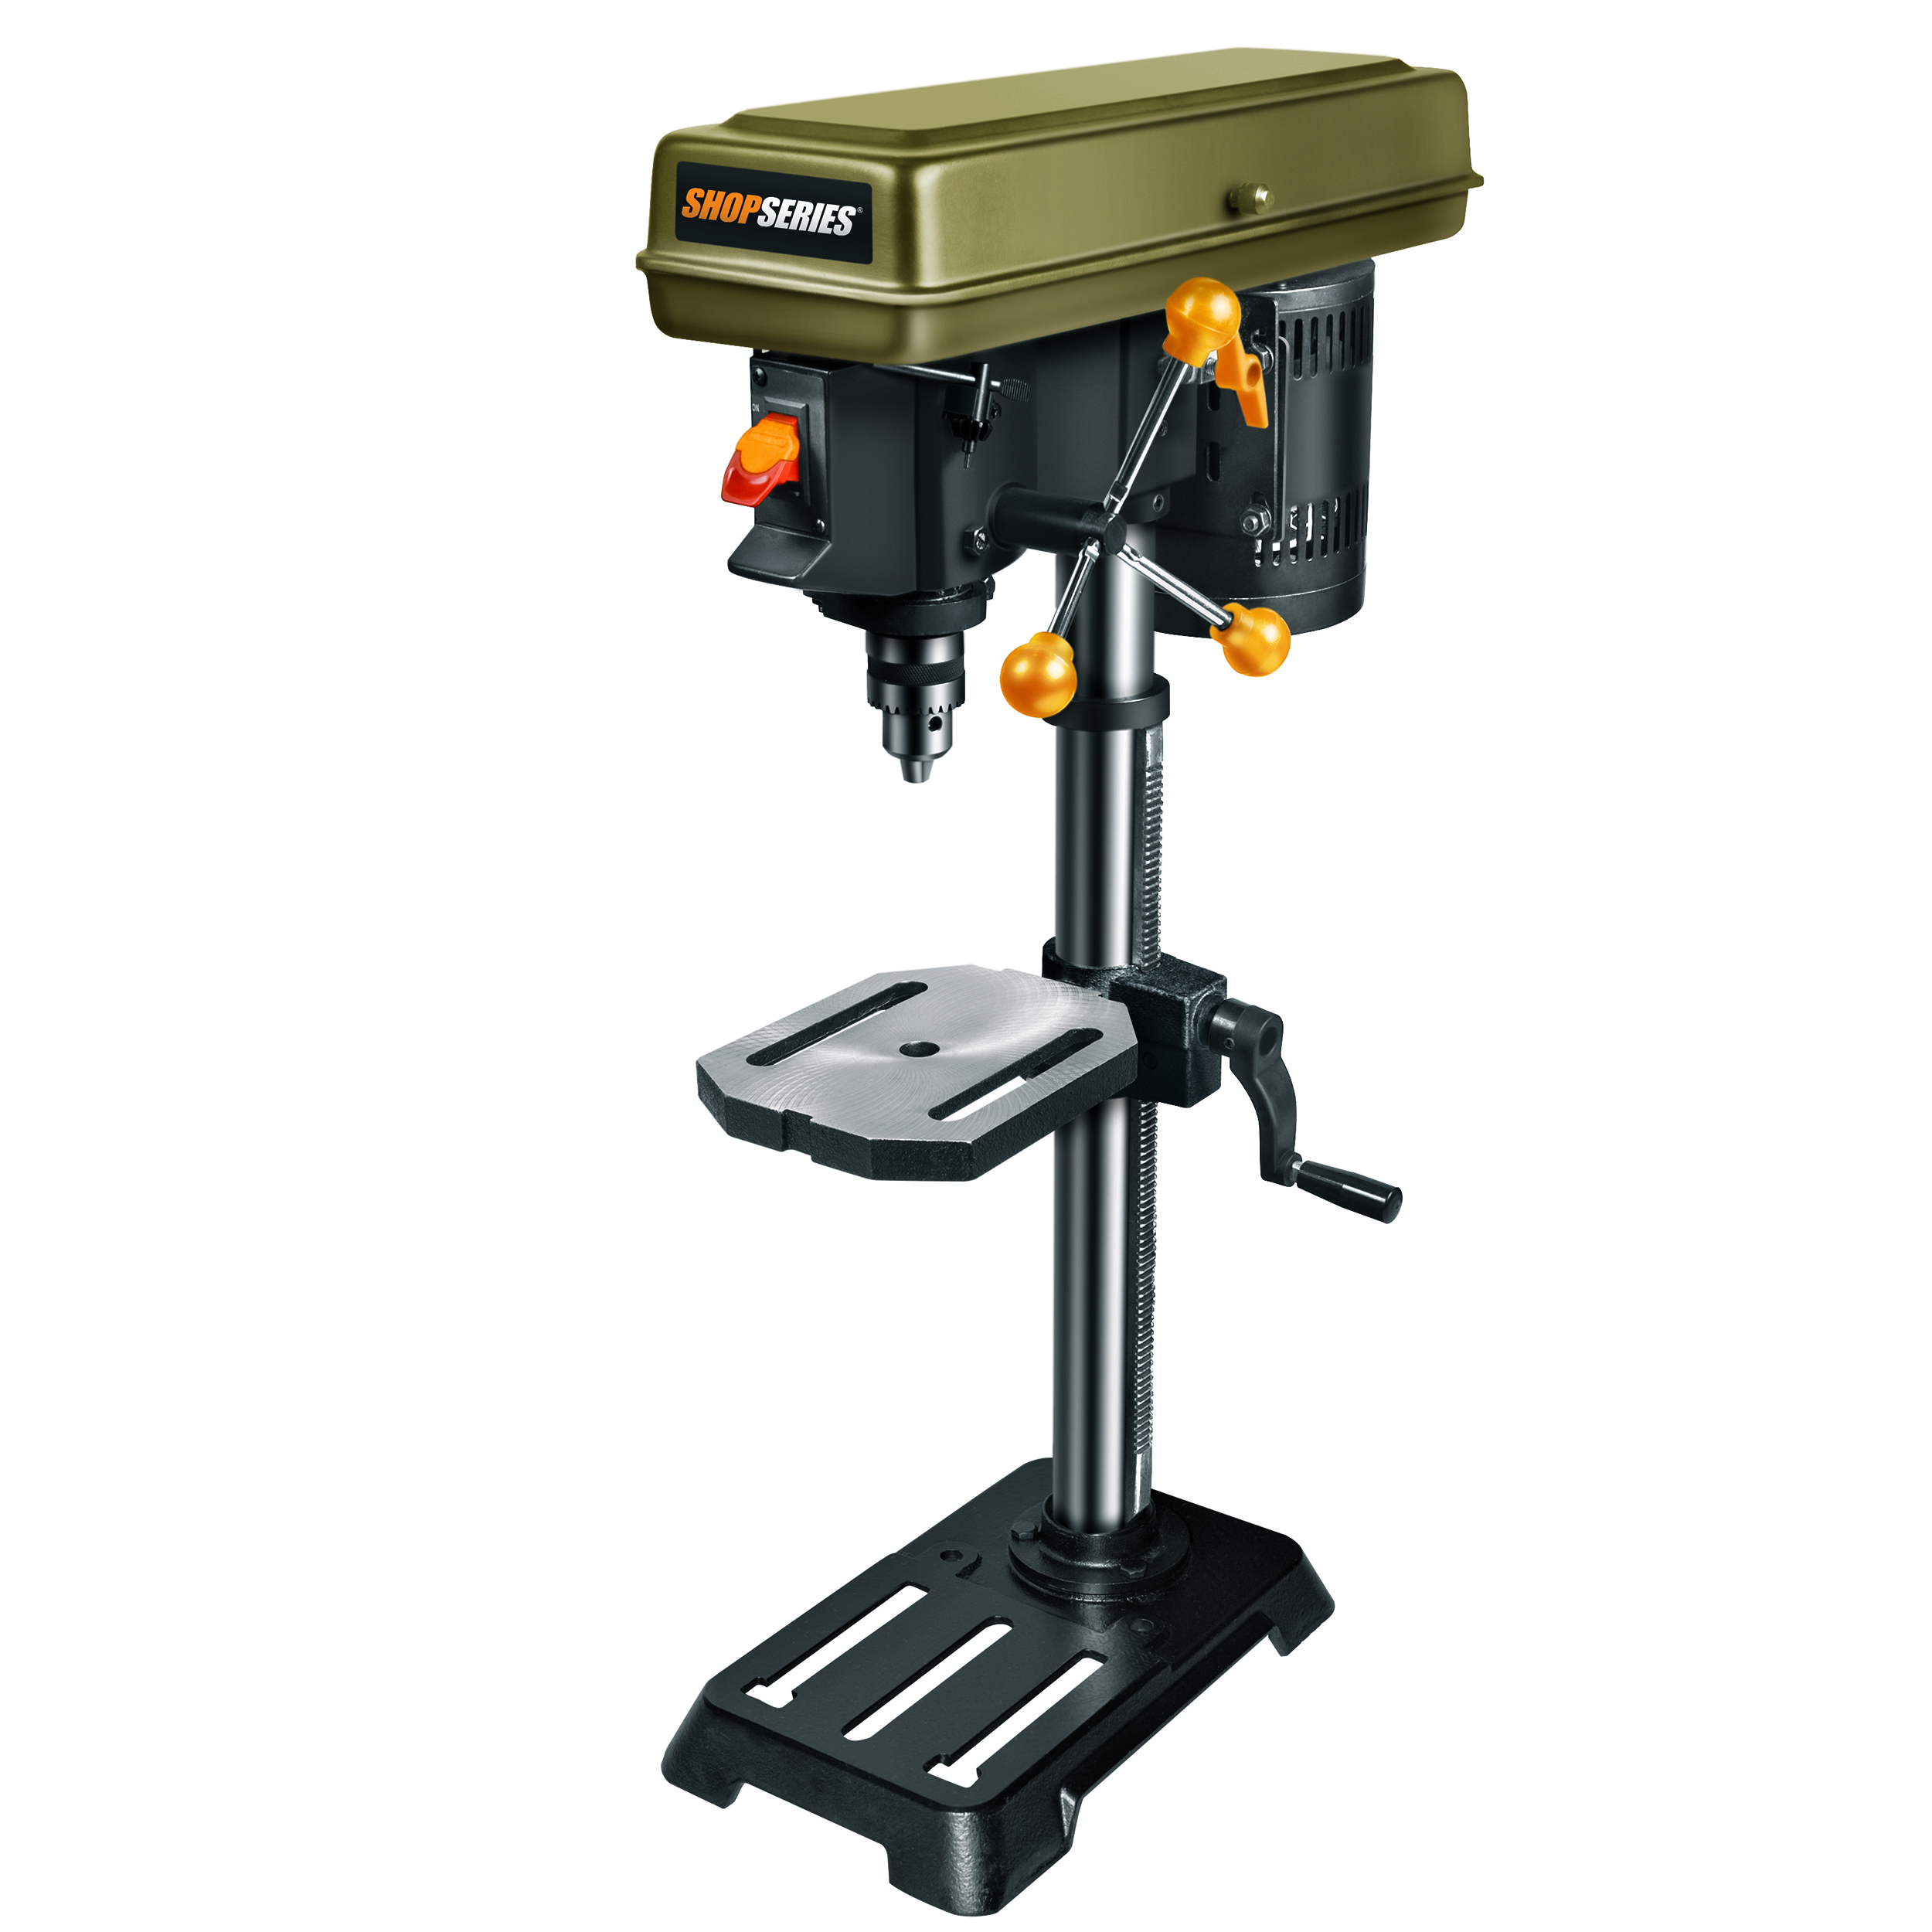 Shop Series 10" Benchtop Drill Press, 5 Speed, Model Rk7033